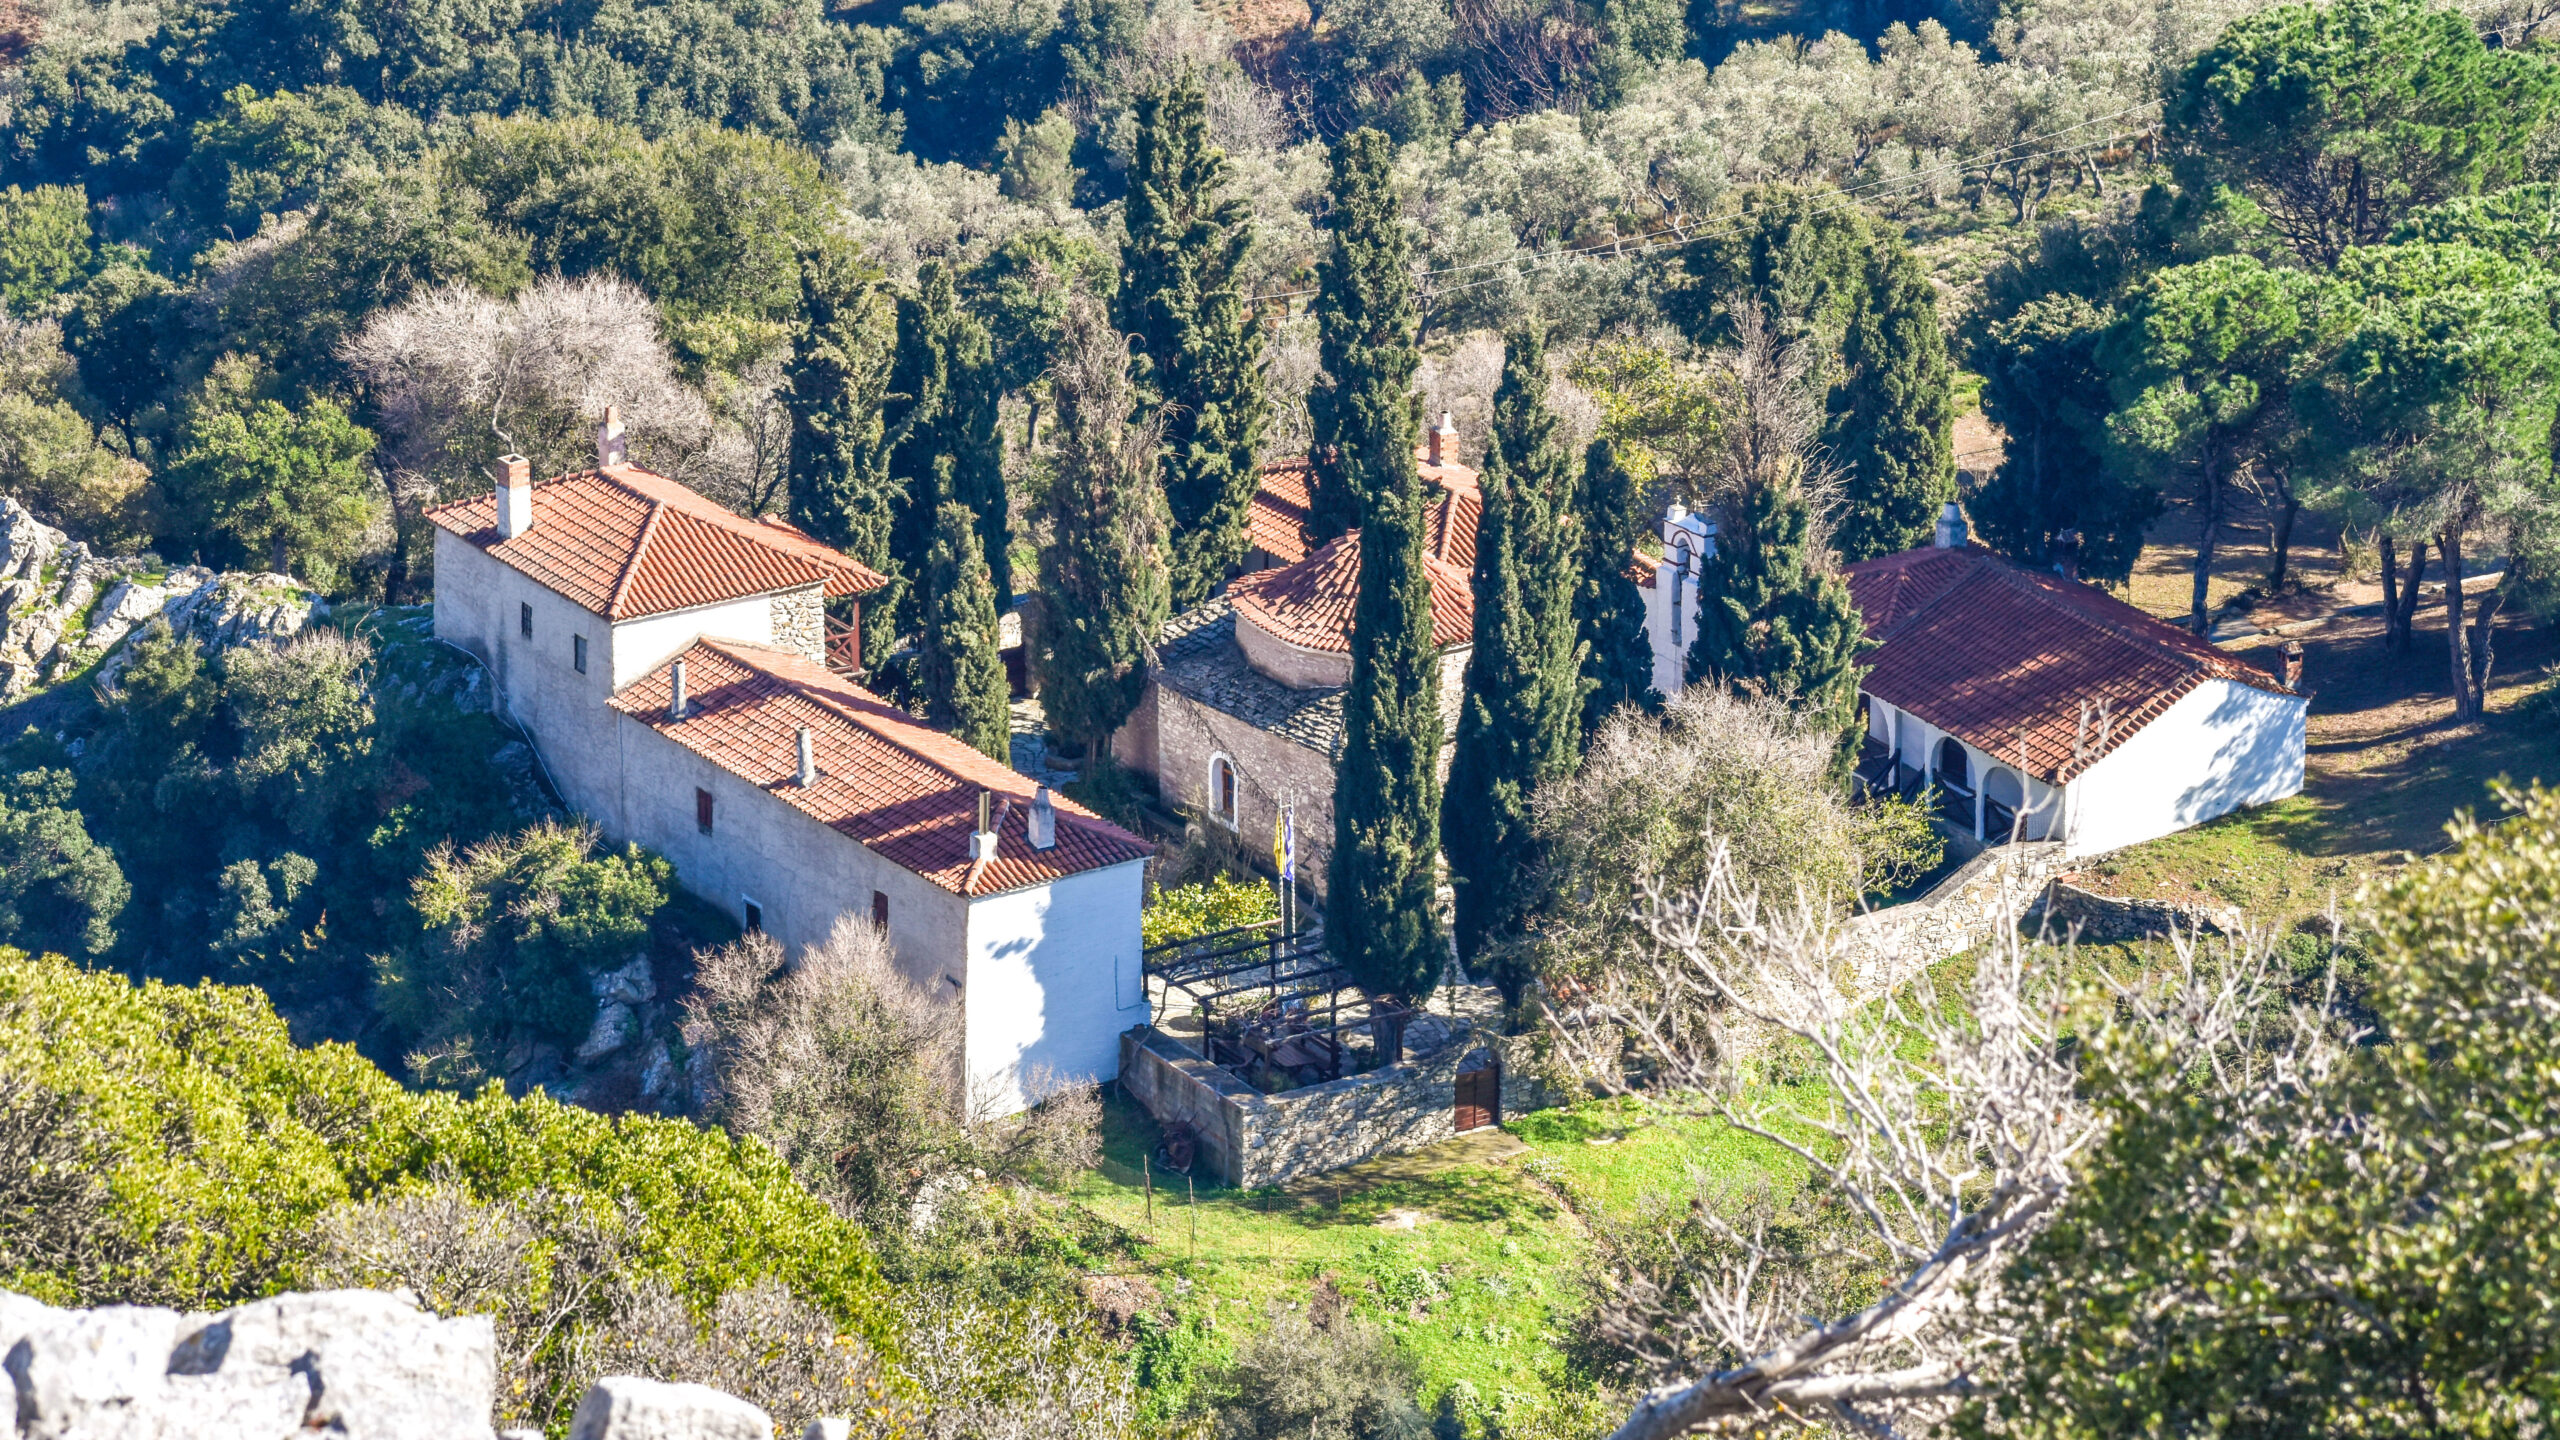 Agios Charalambos Monastery